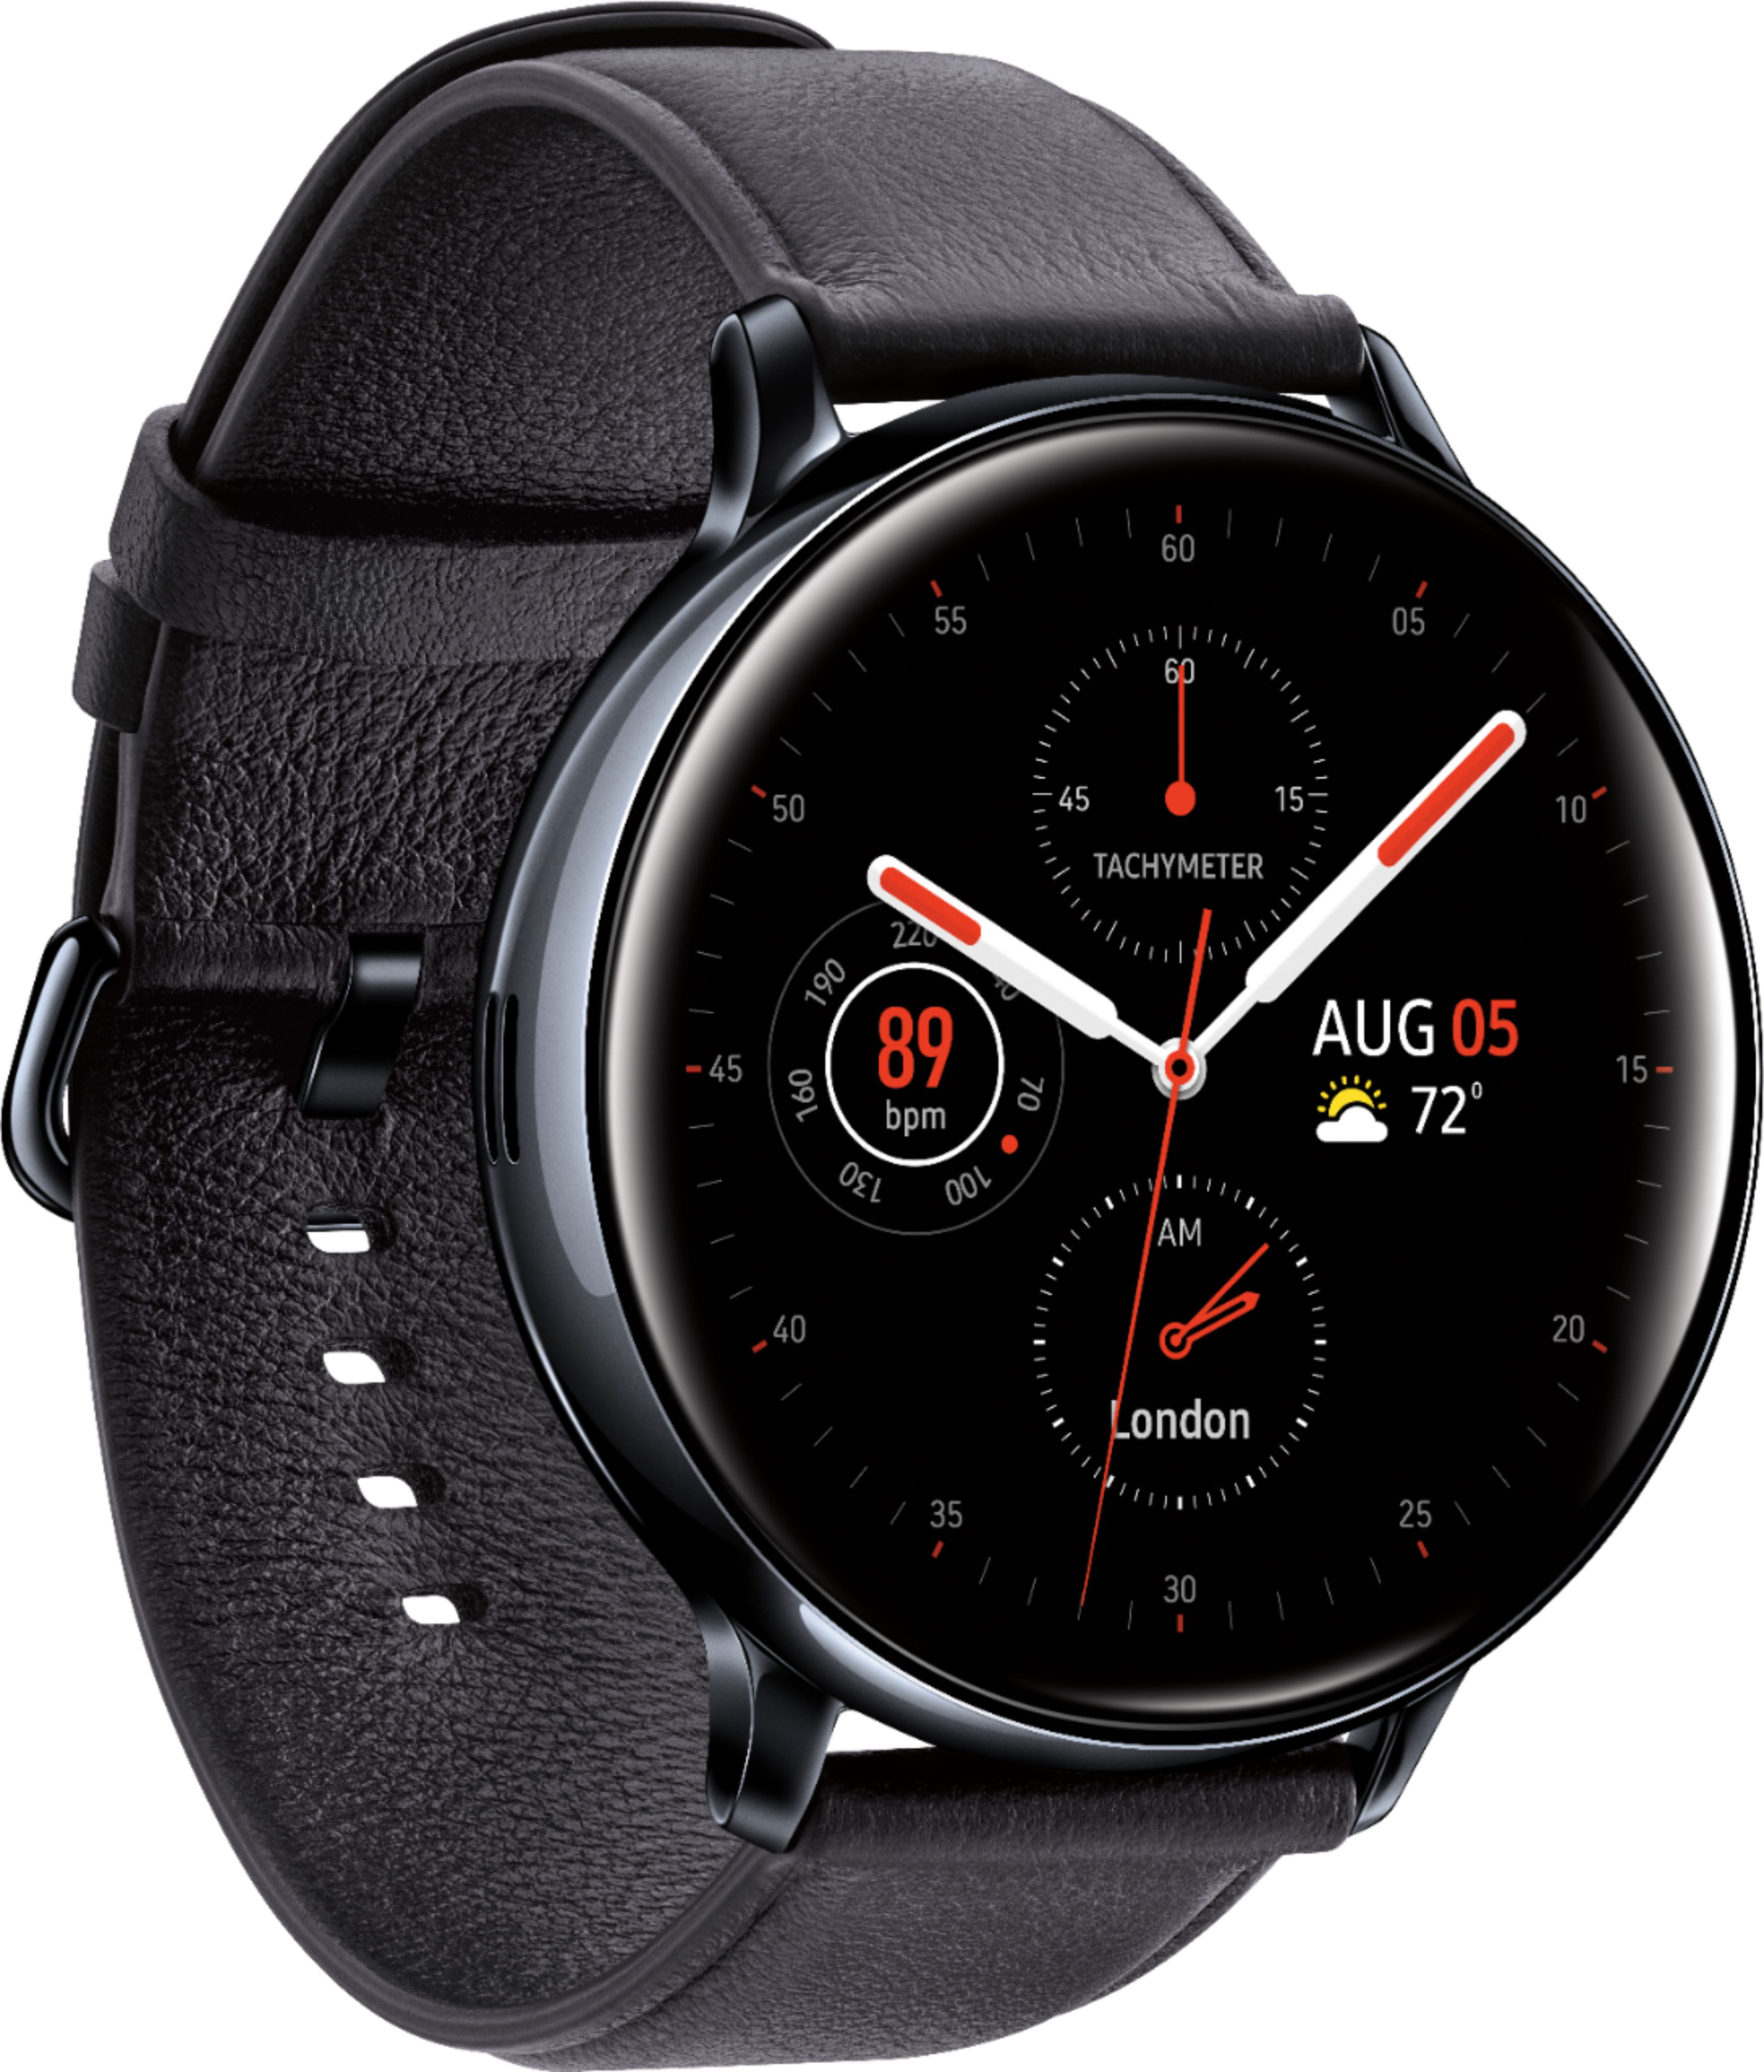 Left View: Samsung - Geek Squad Certified Refurbished Galaxy Watch Active2 Smartwatch 44mm Stainless Steel LTE (Unlocked) - Black